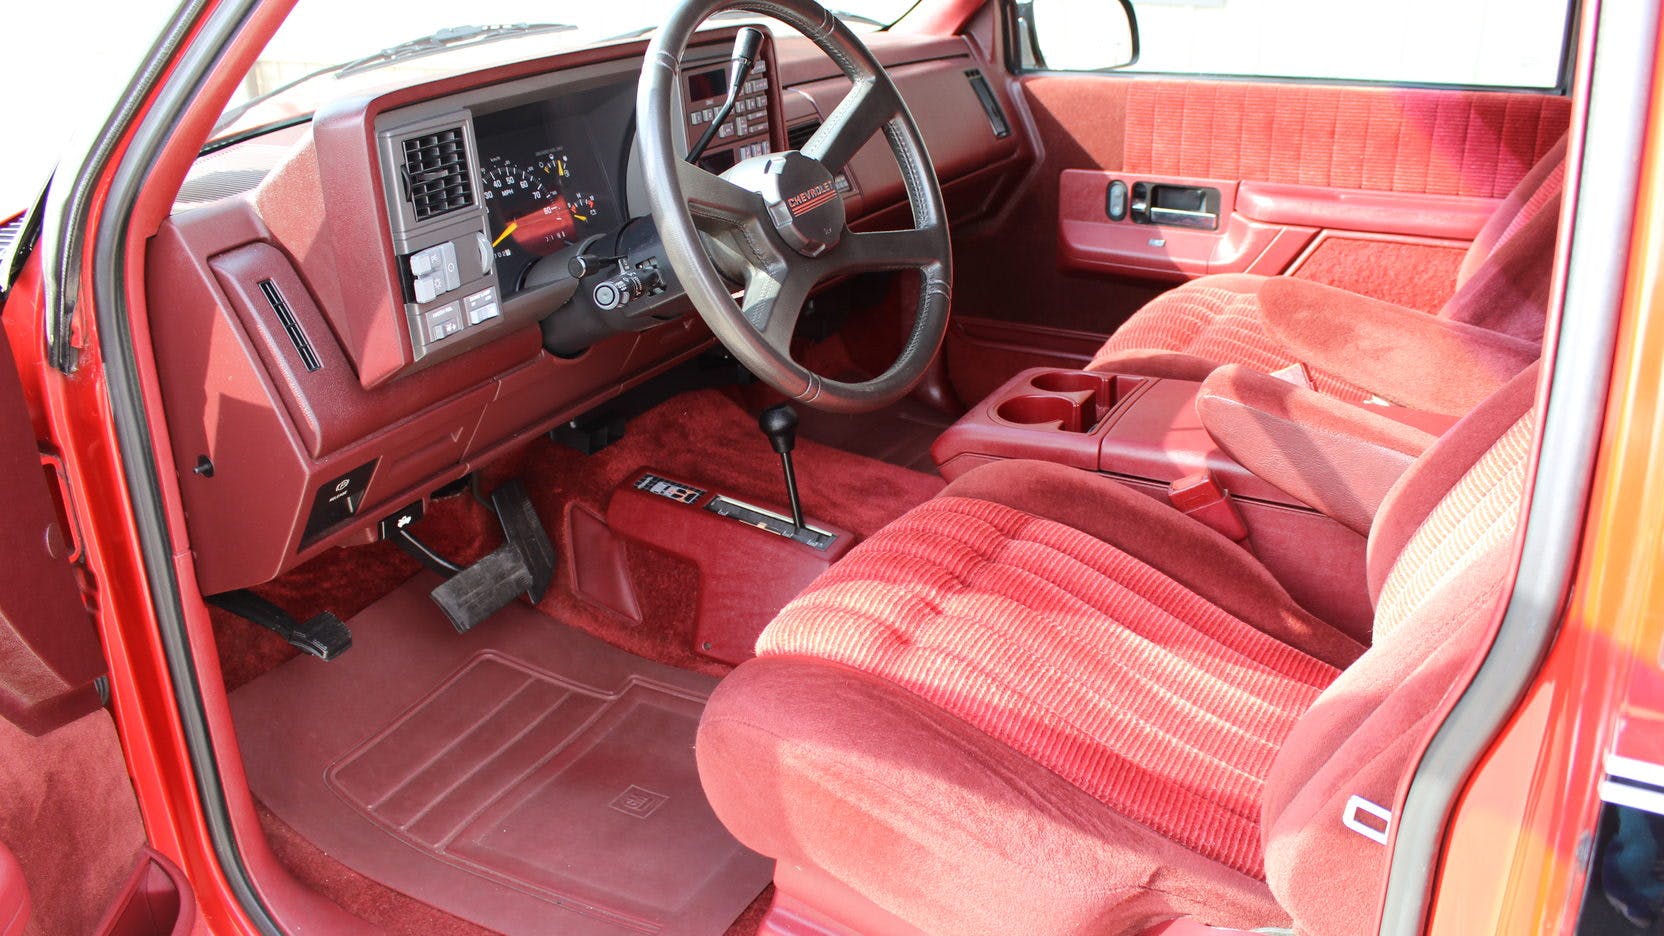 1992 Chevrolet Blazer interior